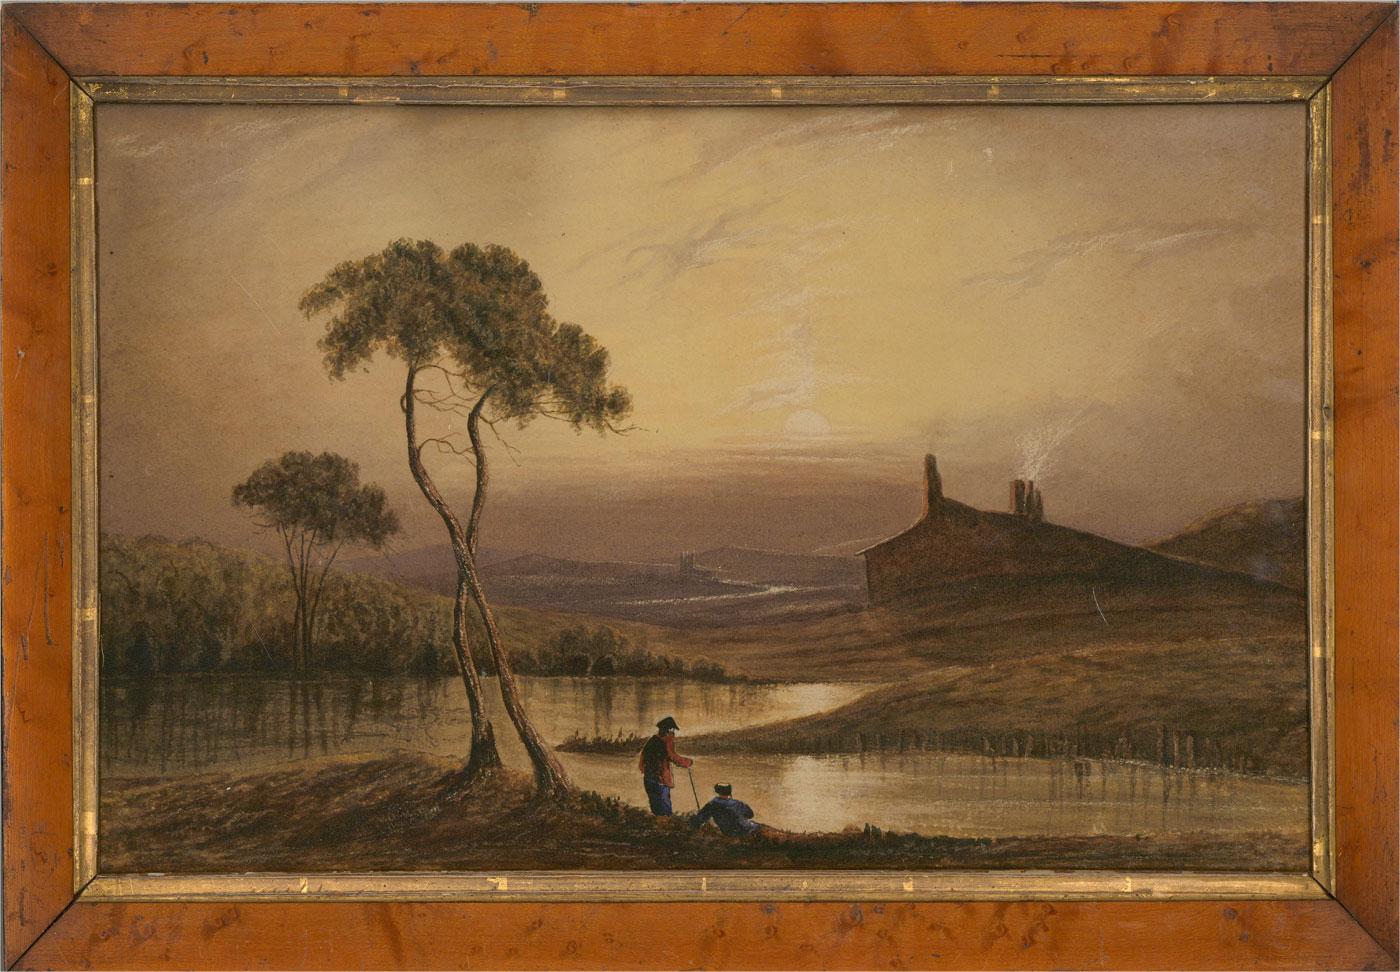 Unknown Landscape Art - 18th Century Watercolour - Lakeside View